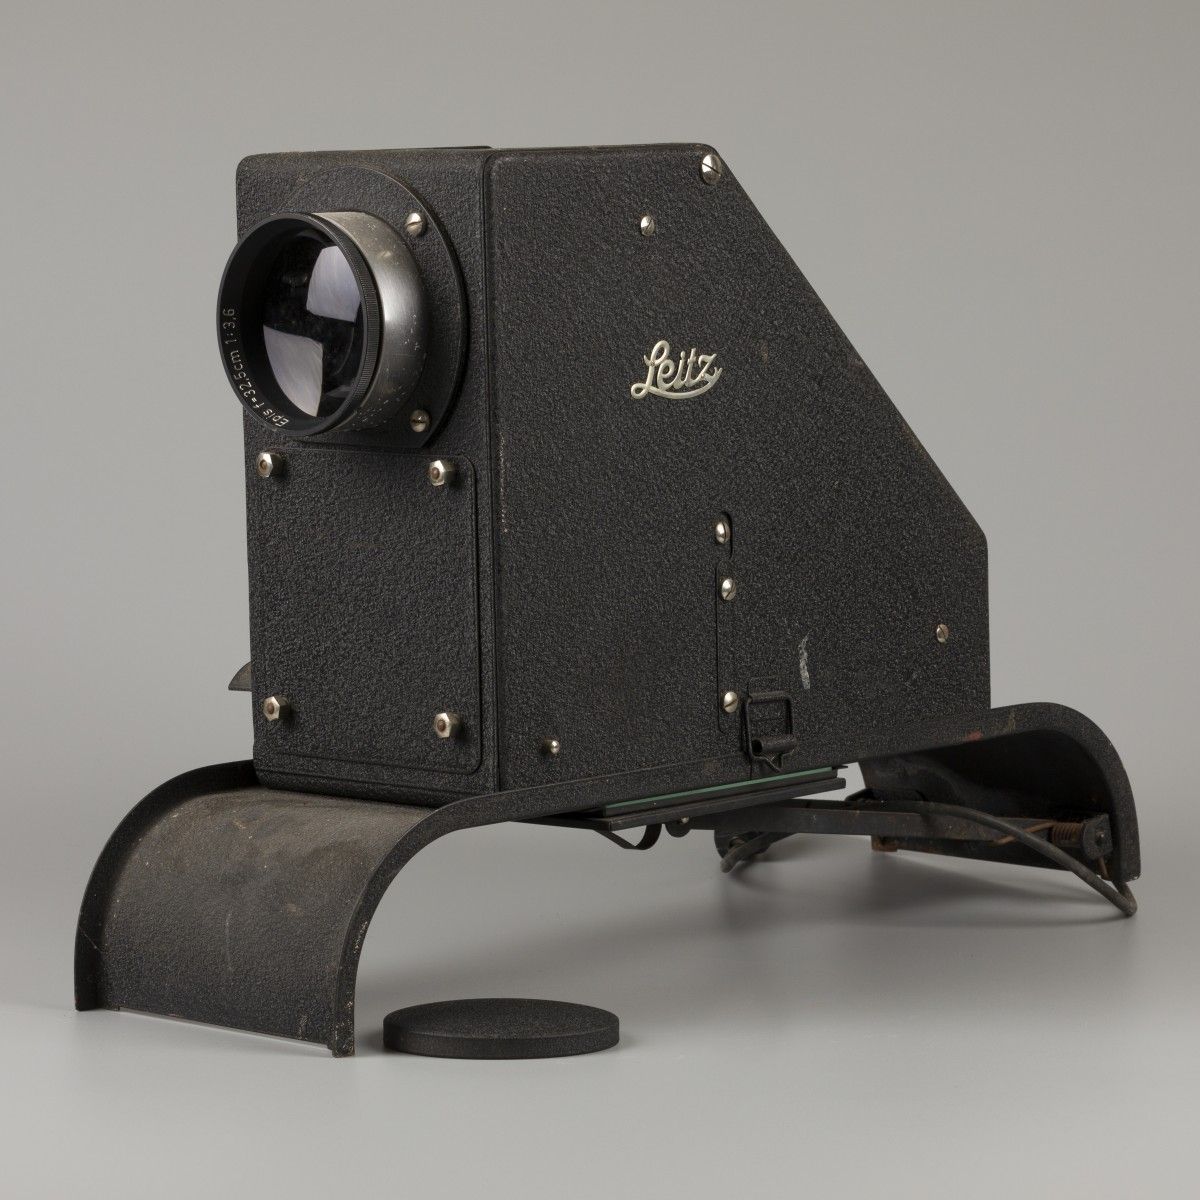 A Leitz Wetzlar epidiascope. Serial number: A79294